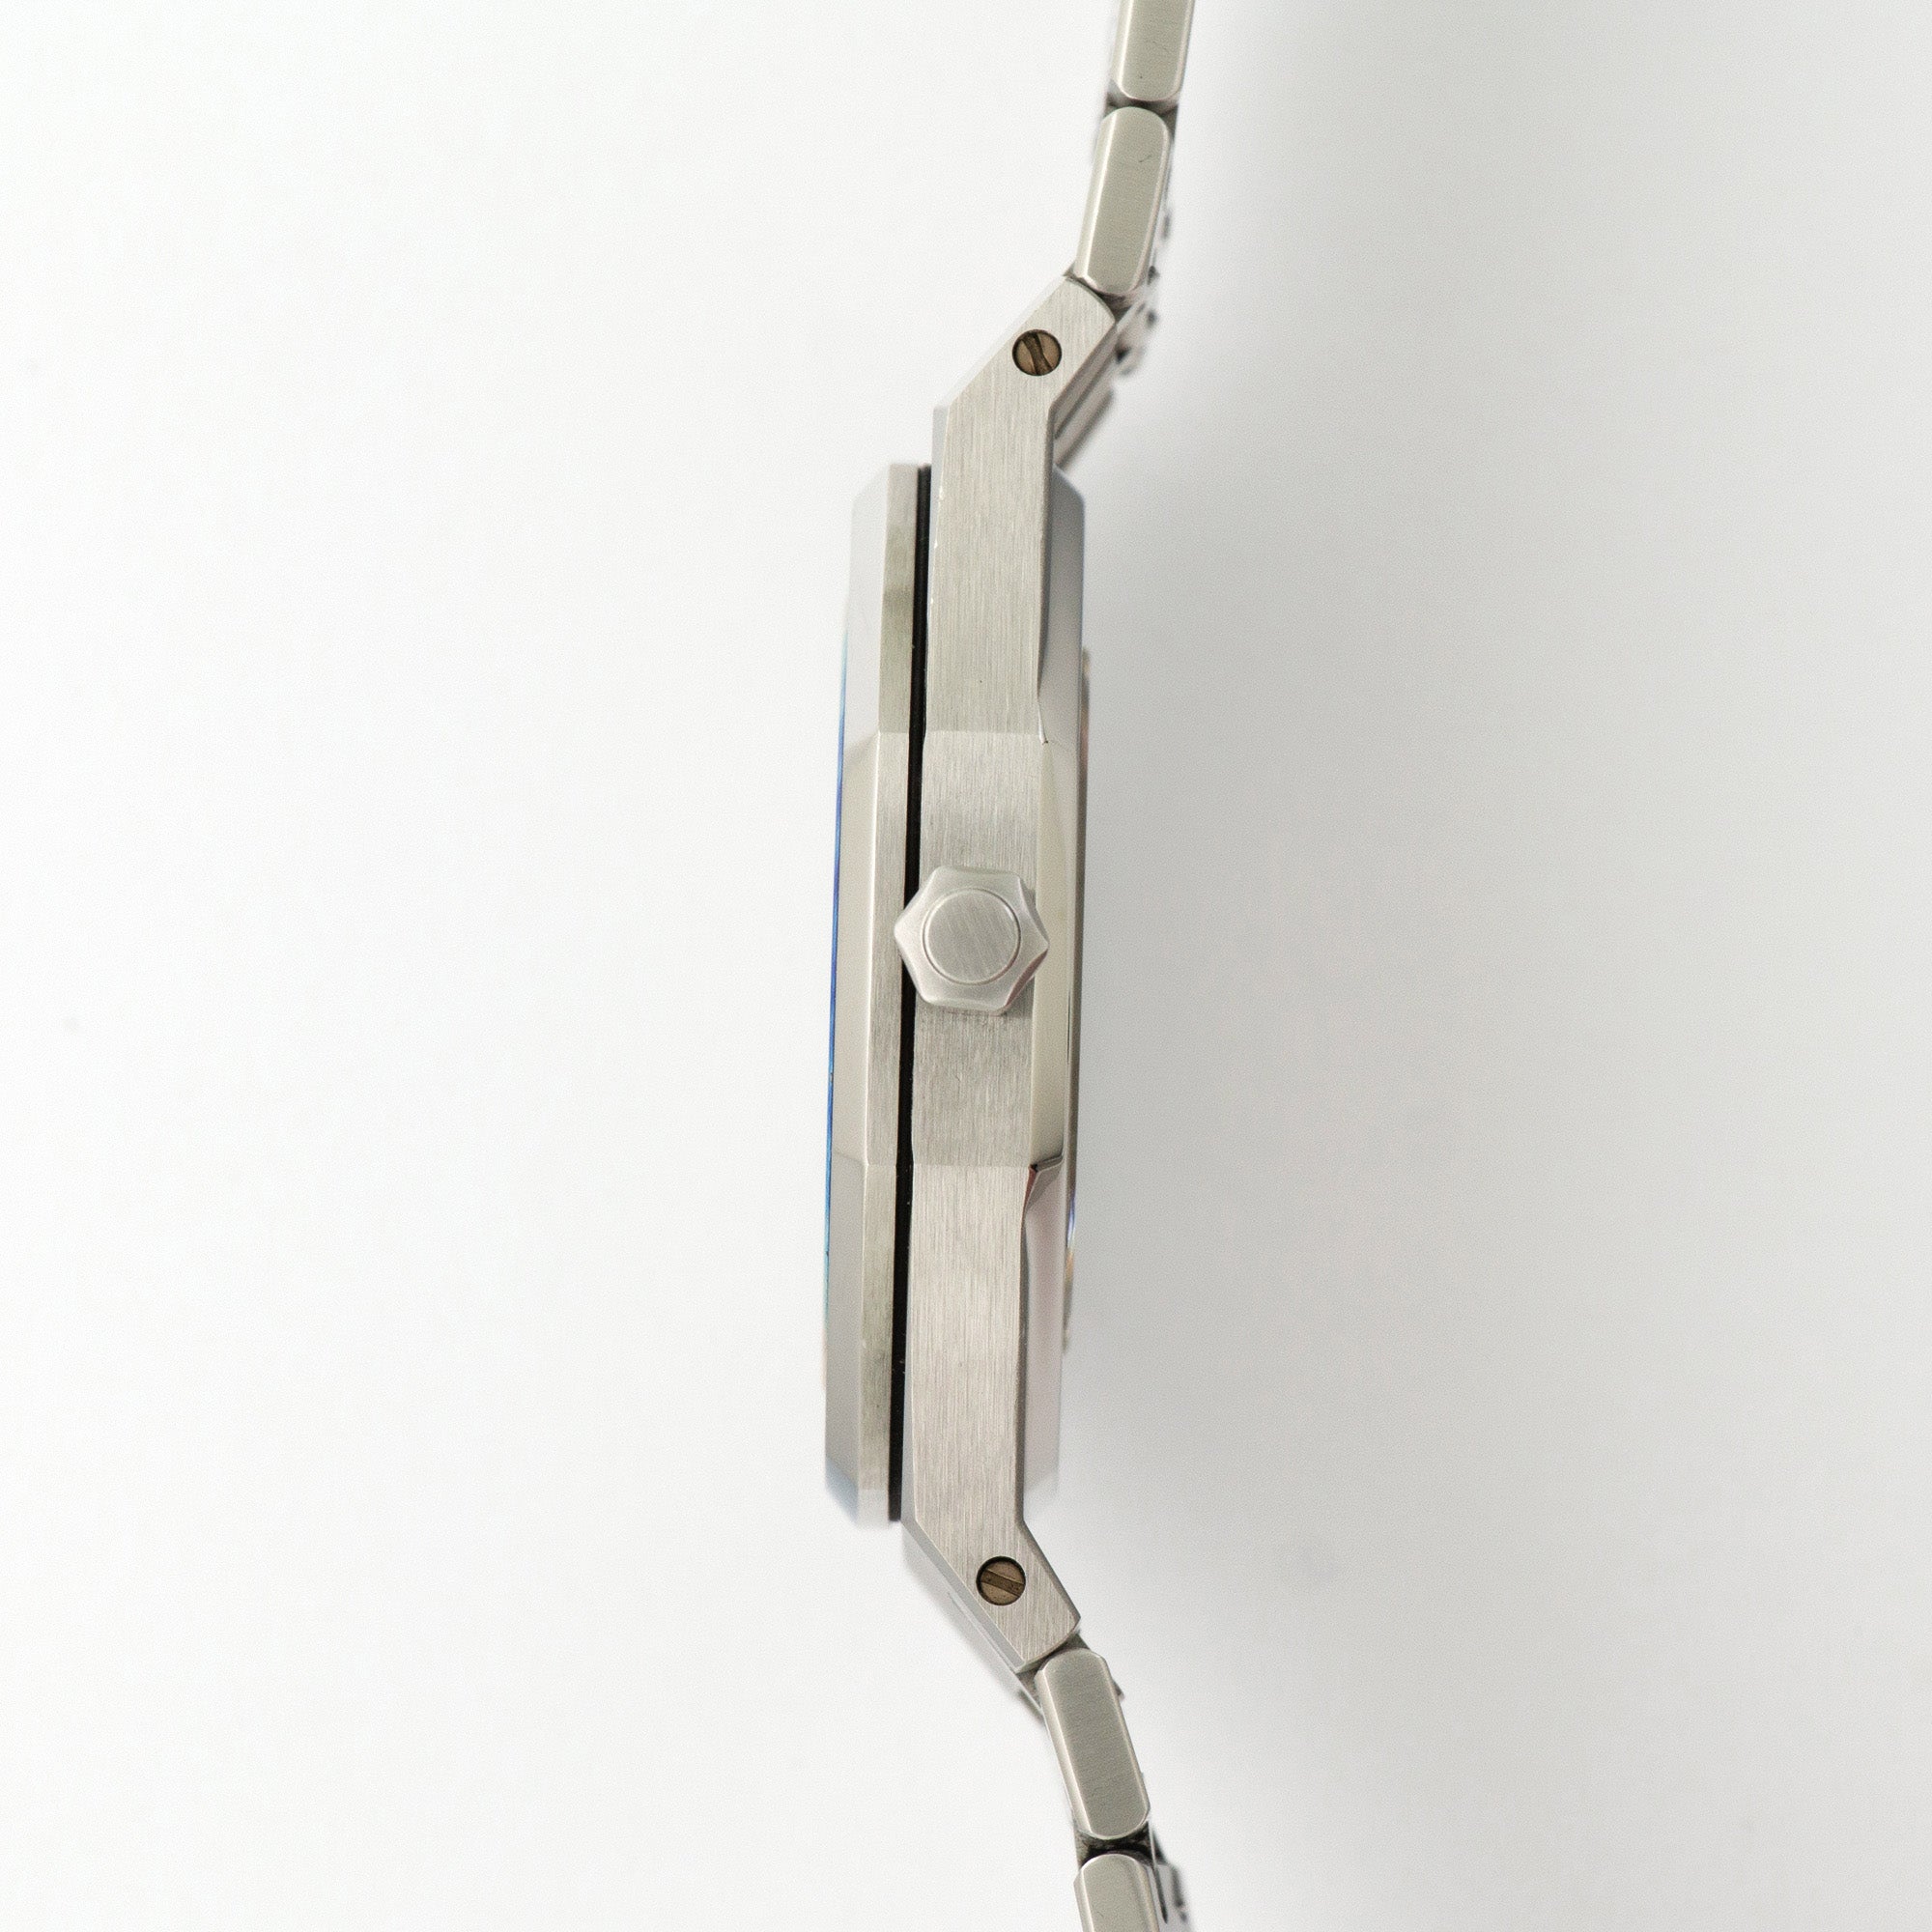 Audemars Piguet - Audemars Piguet Royal Oak Foundation Limited Edition Watch Ref. 14990 - The Keystone Watches